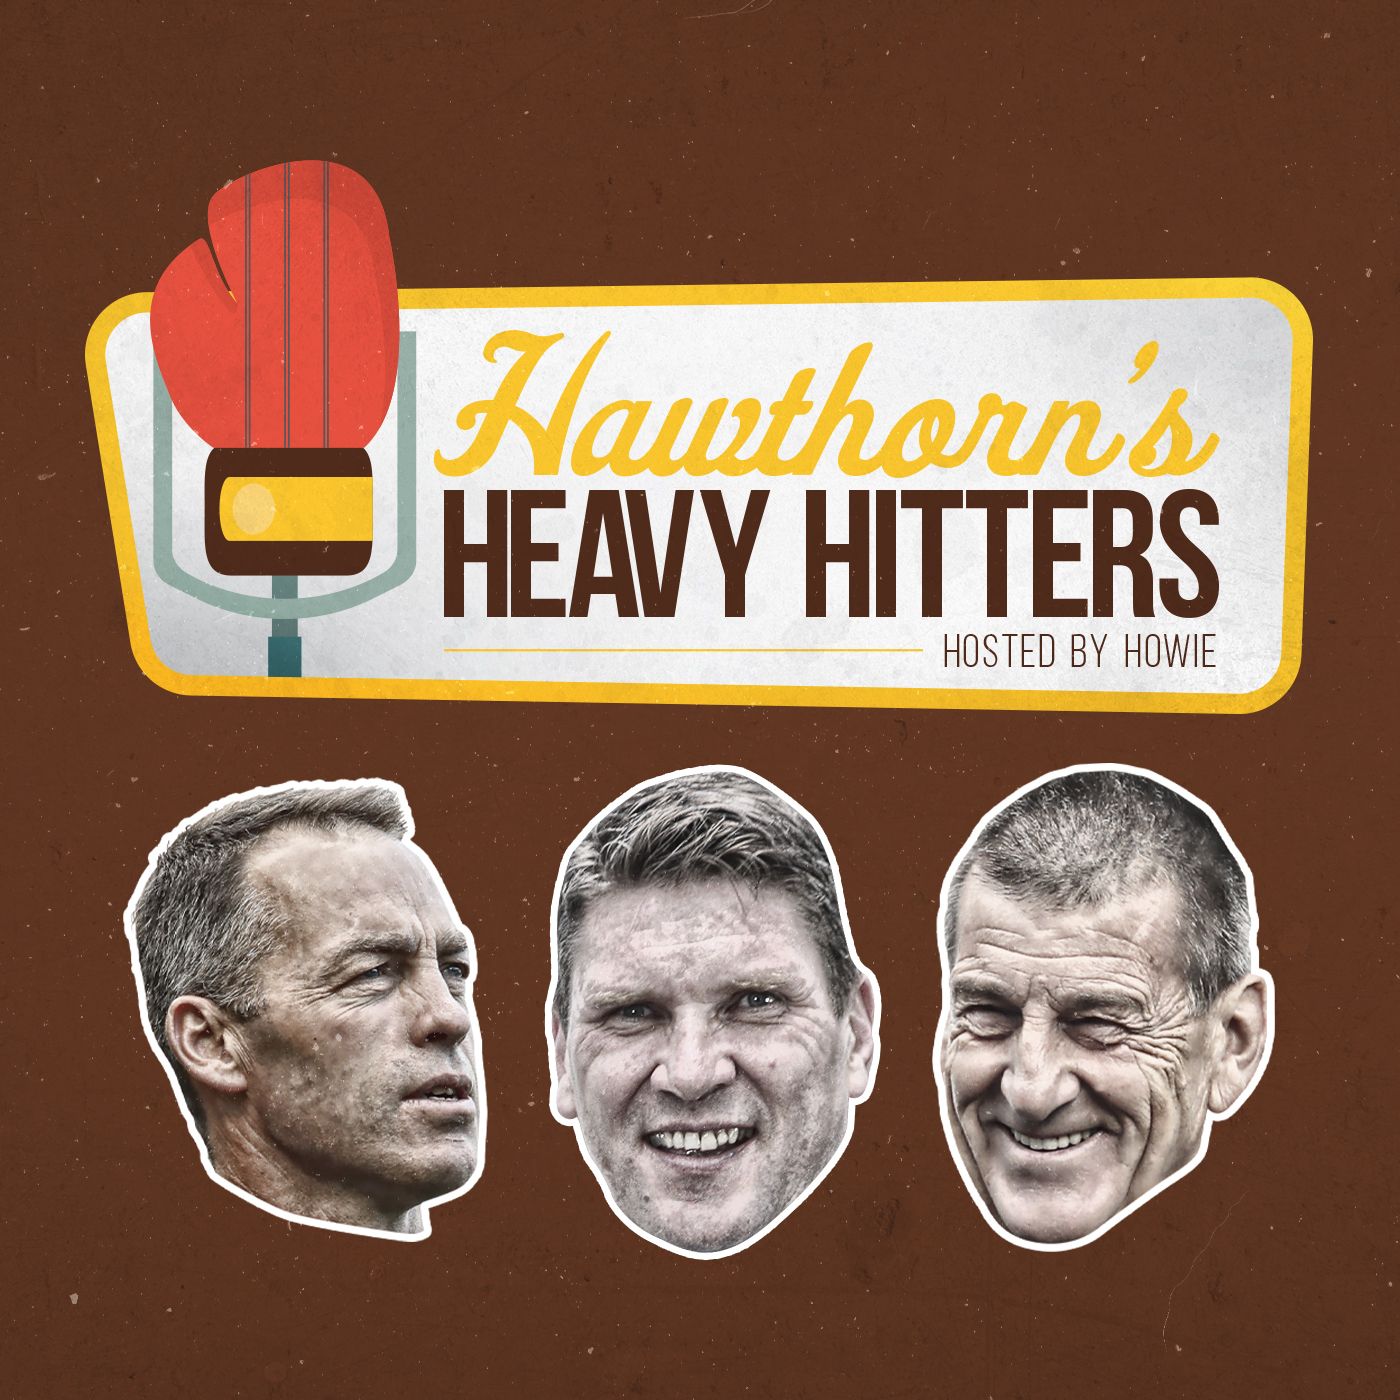 Hawthorn's Heavy Hitters